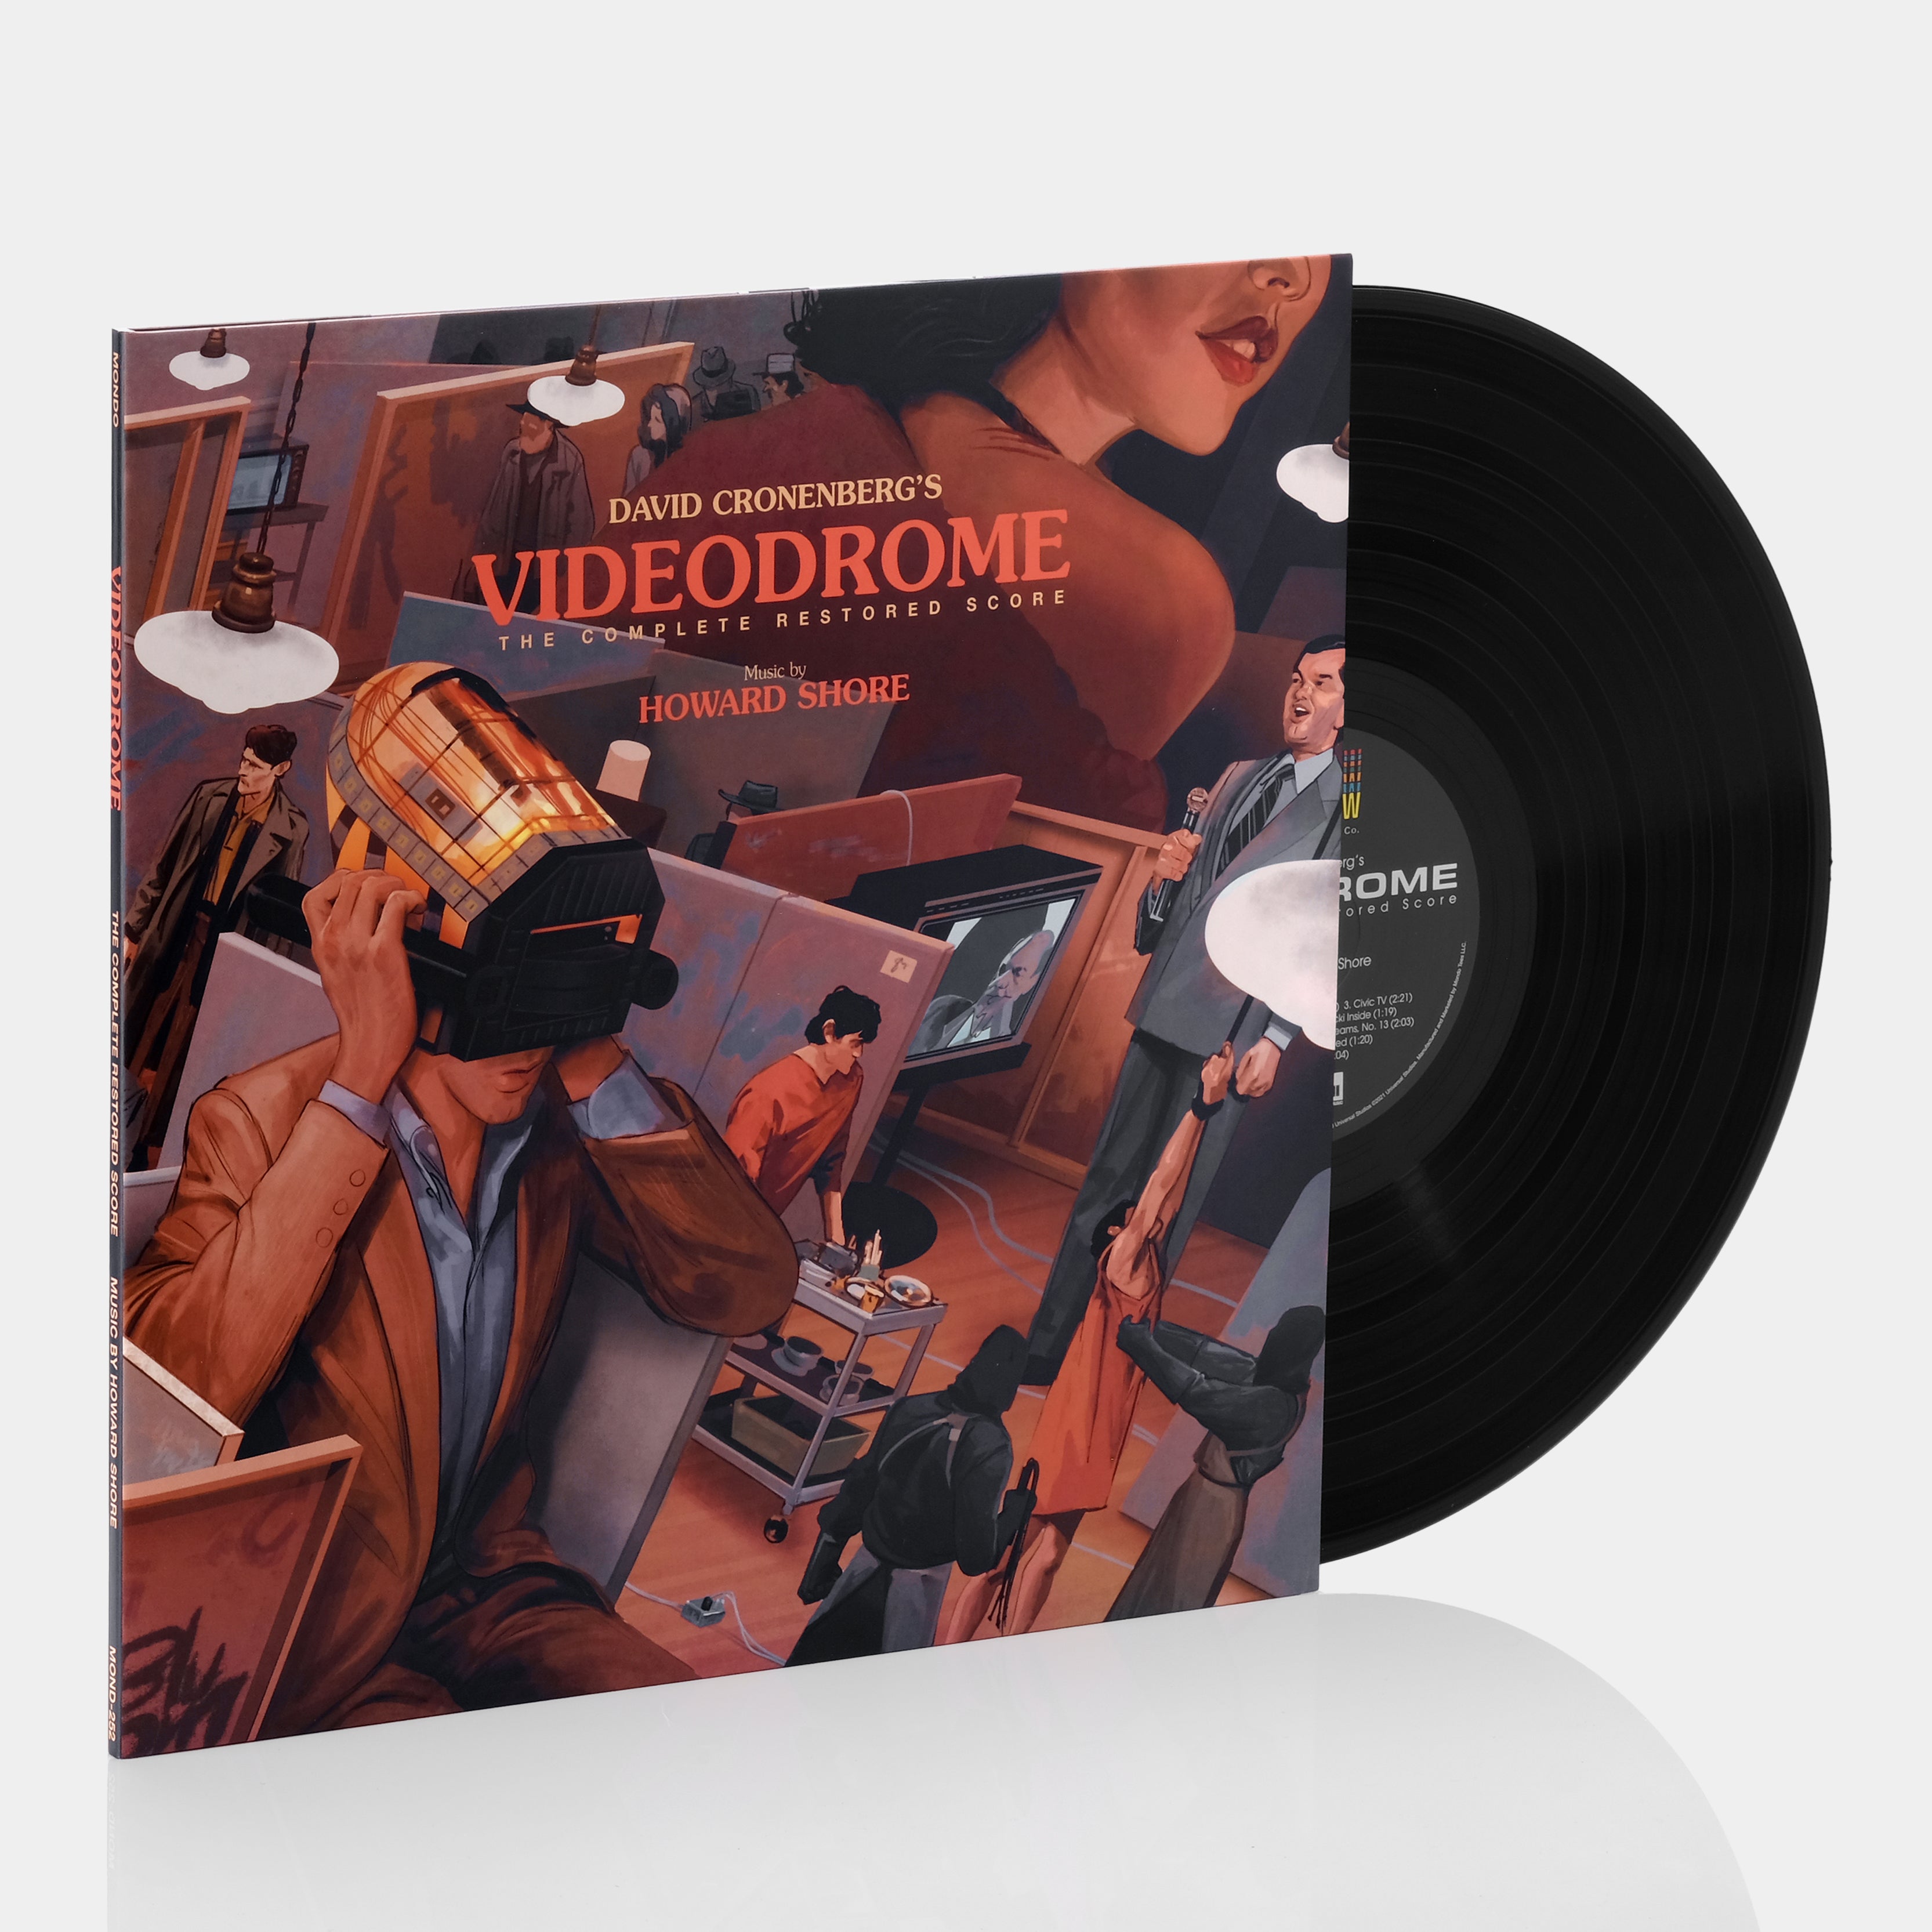 Howard Shore - Videodrome (The Complete Restored Score) LP Vinyl Record